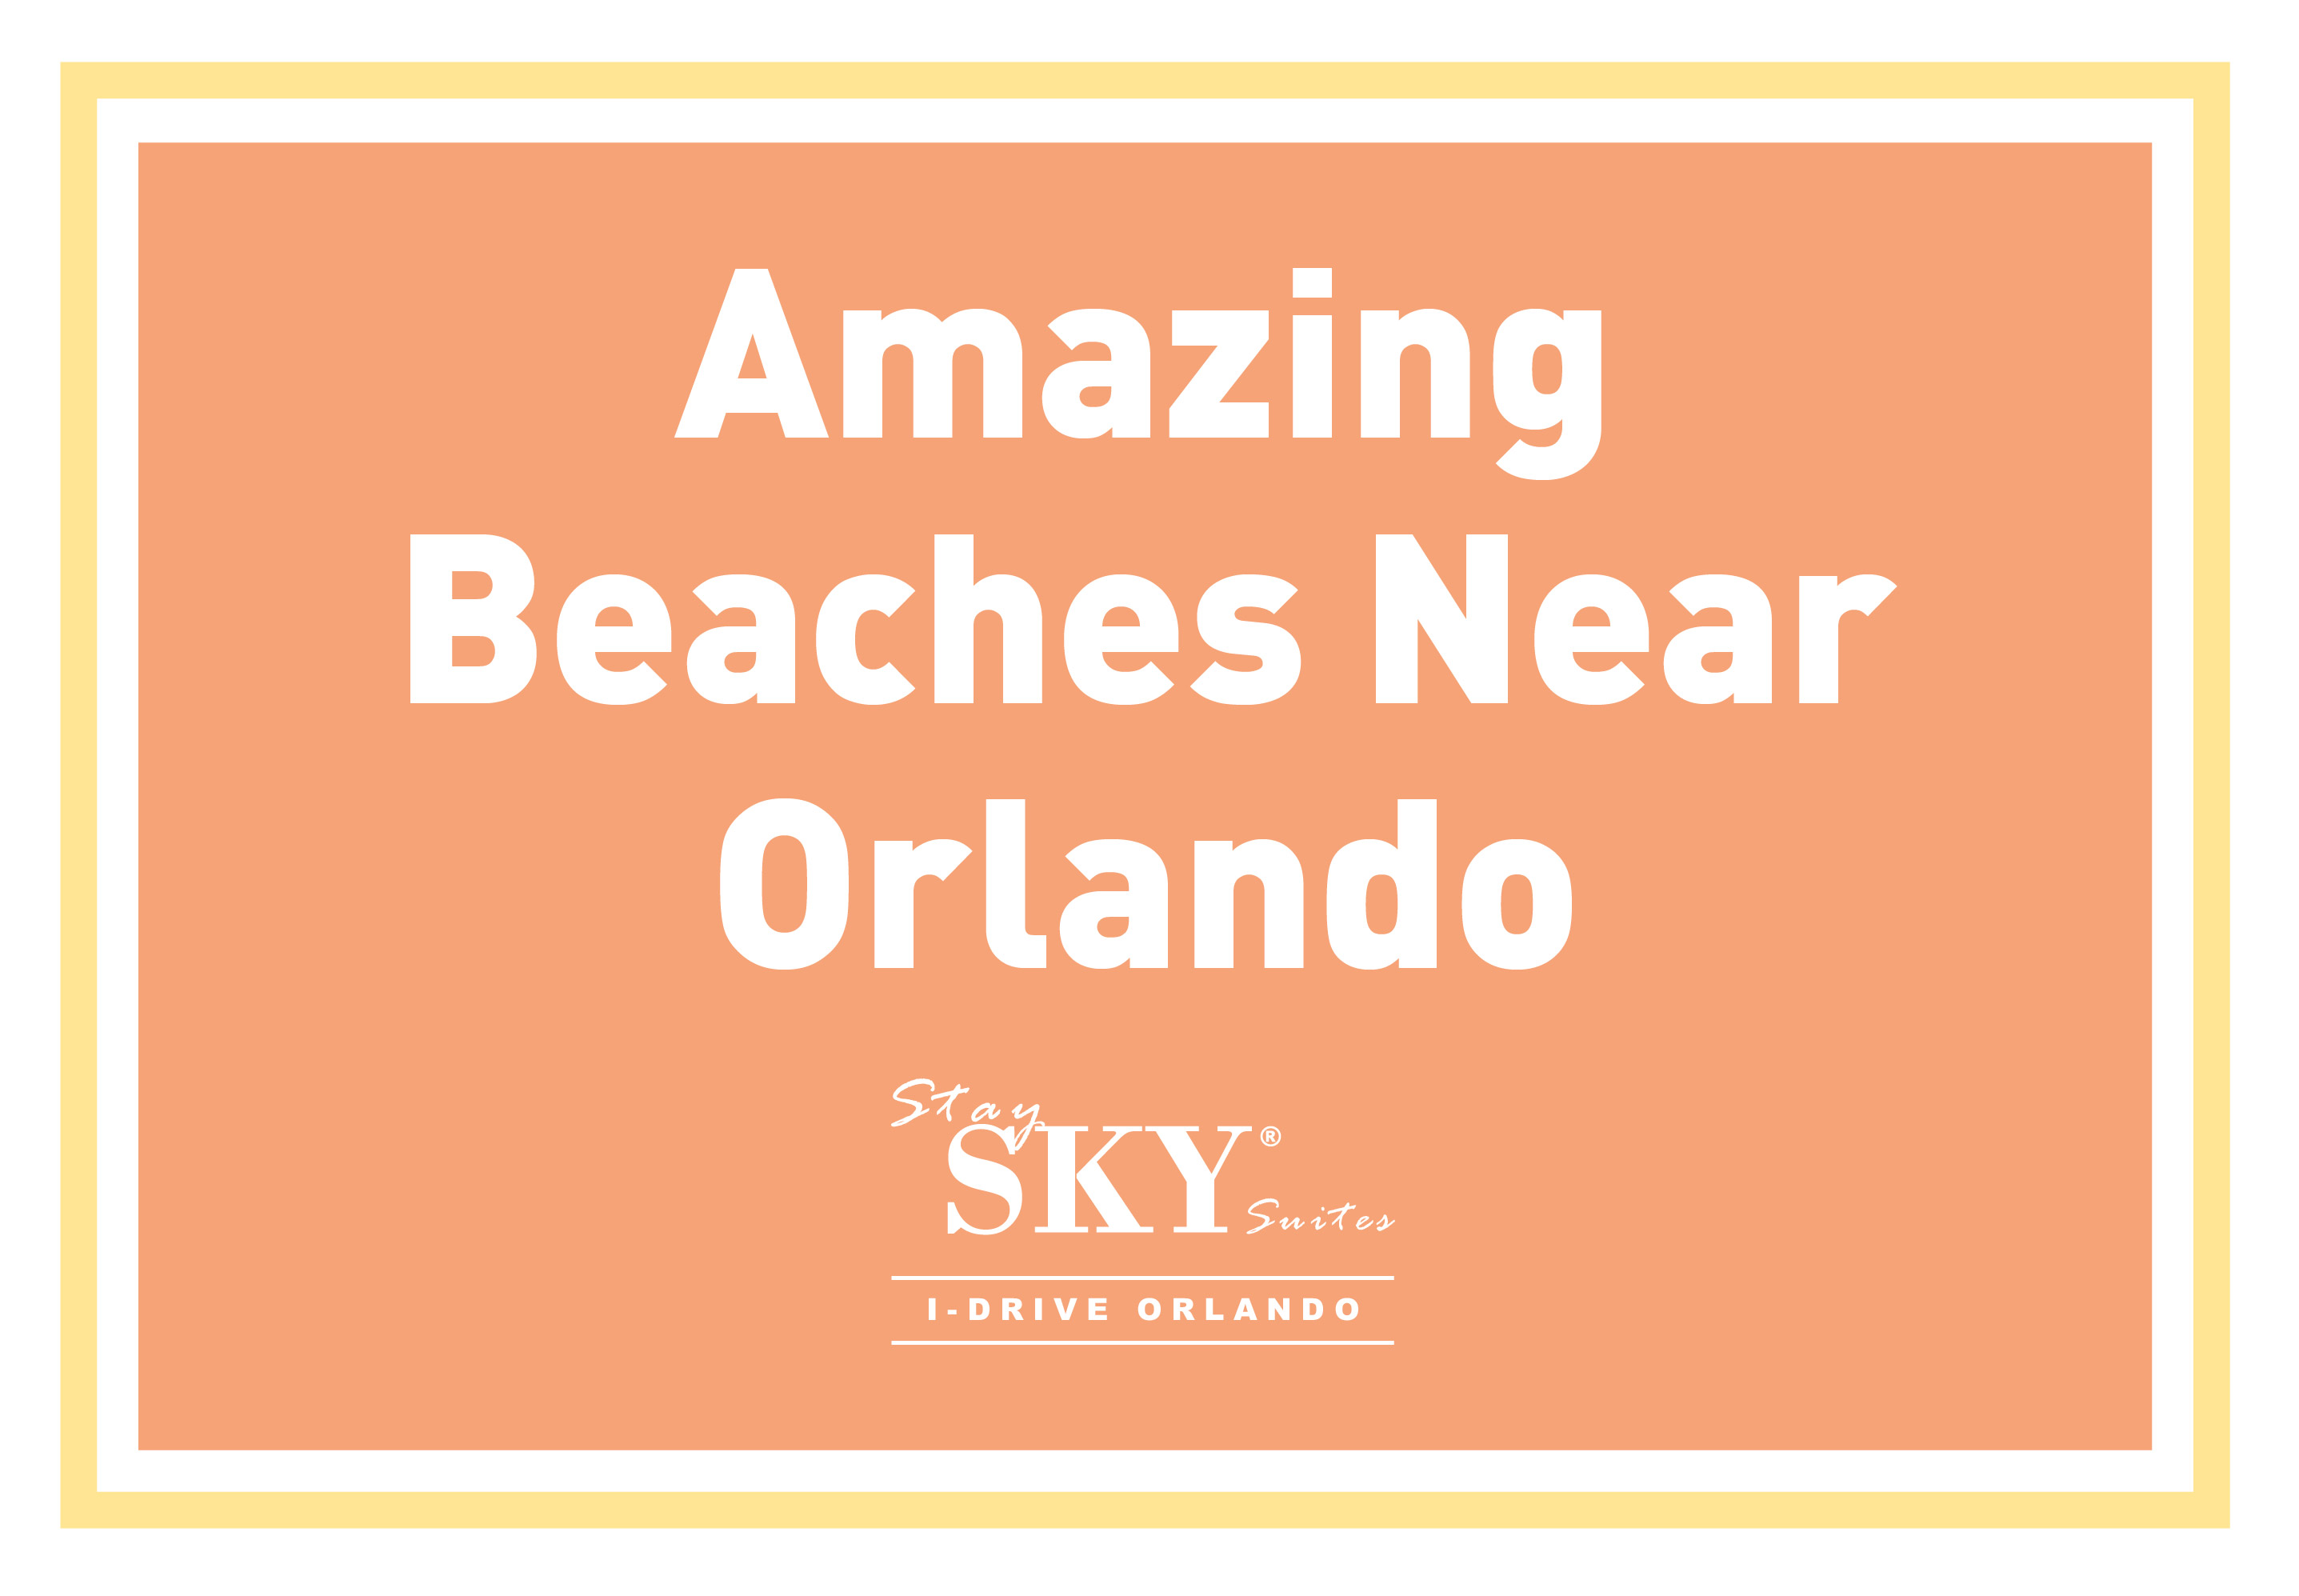 StaySky Suites I - Drive - Orlando Resorts - Beaches